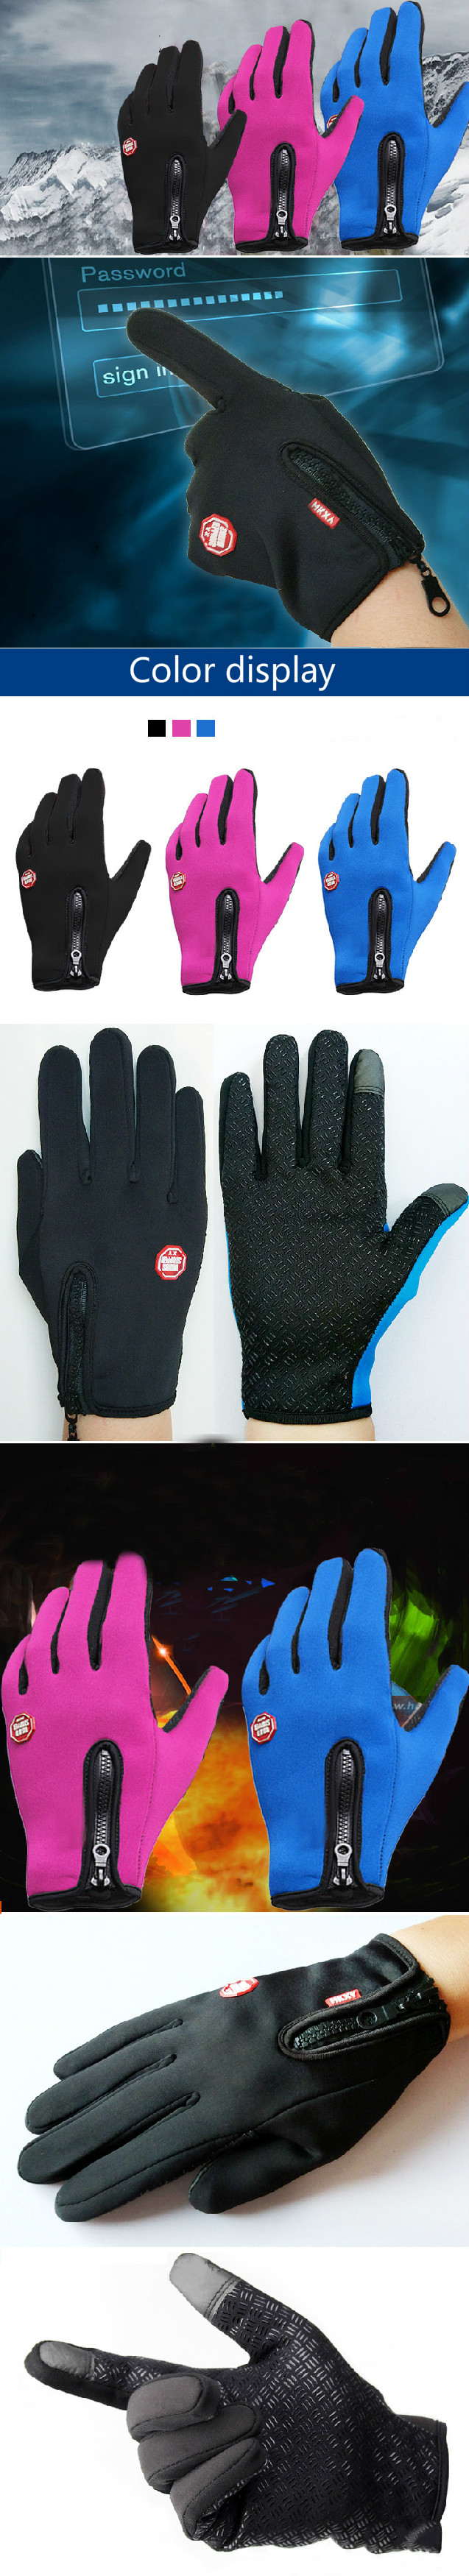 Fishing-Accessories-Full-Finger-Neoprene--Winter-Anti-Slip-Fishing-Gloves-PU-Breathable-Leather-Warm-1005002296889206